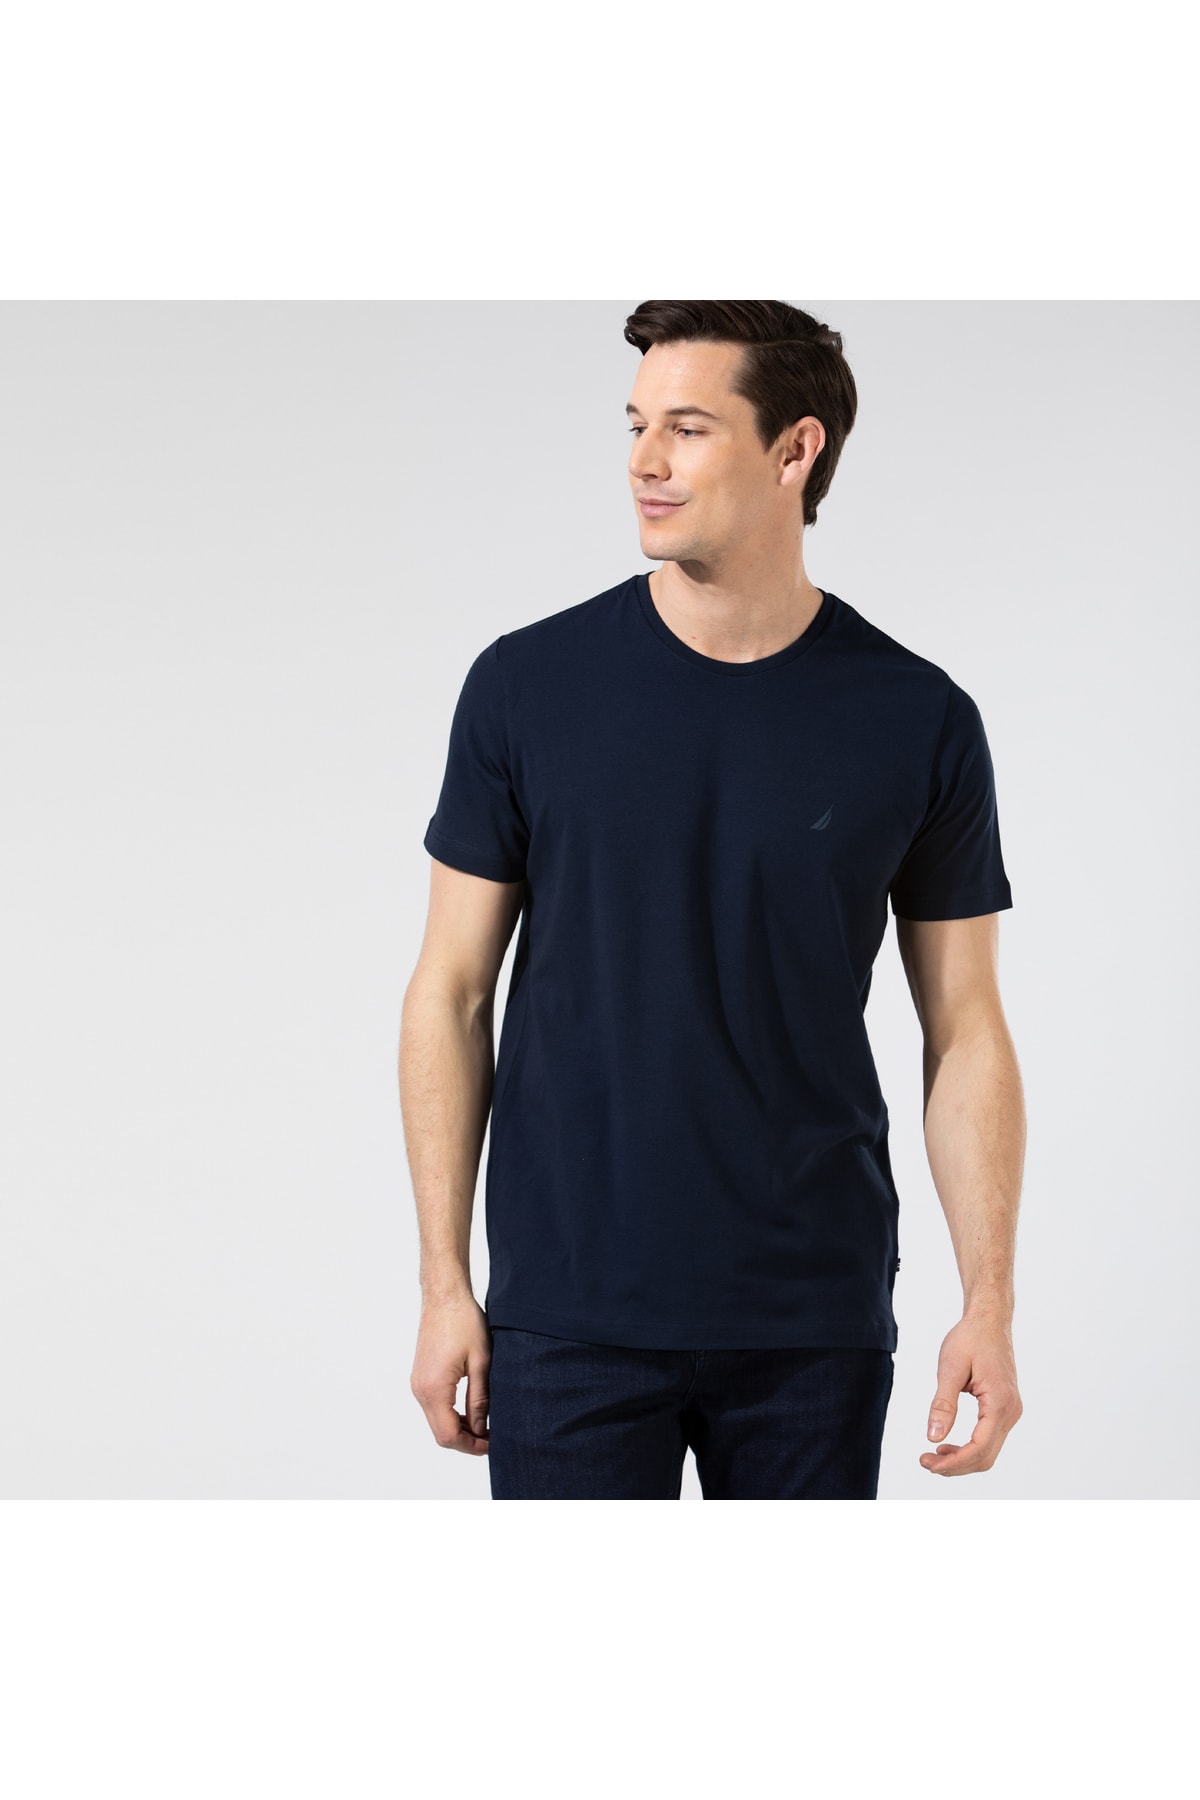 Nautica Erkek Slim Fit Lacivert T-shirt V01000t.4nv